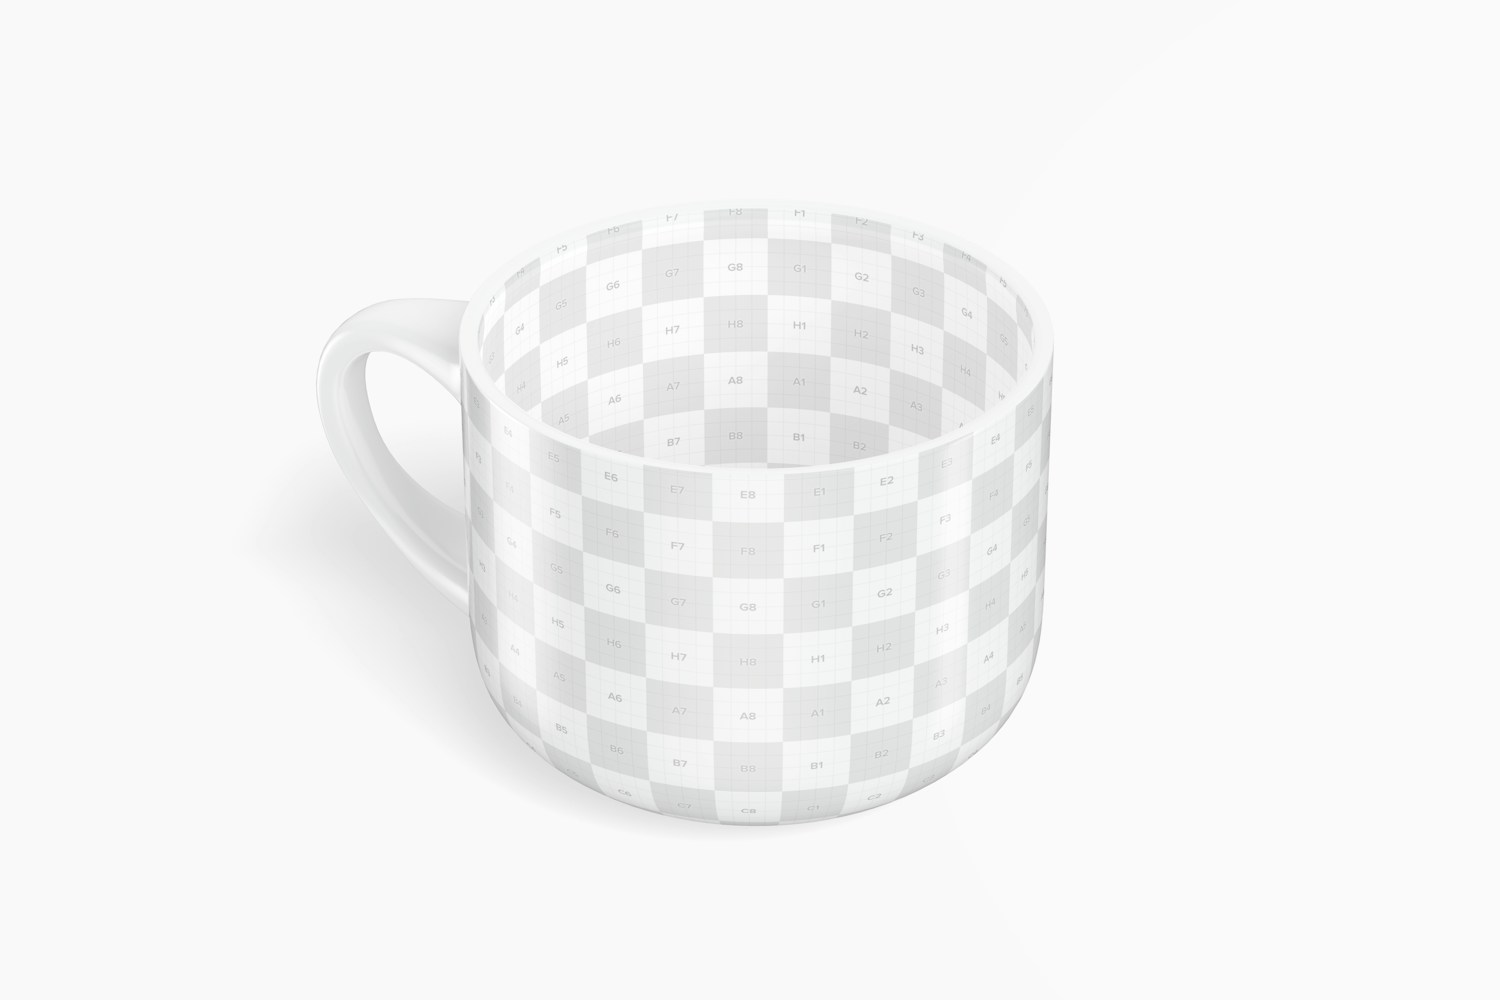 15 oz Jumbo Ceramic Soup Mug Mockup, Isometric Left View